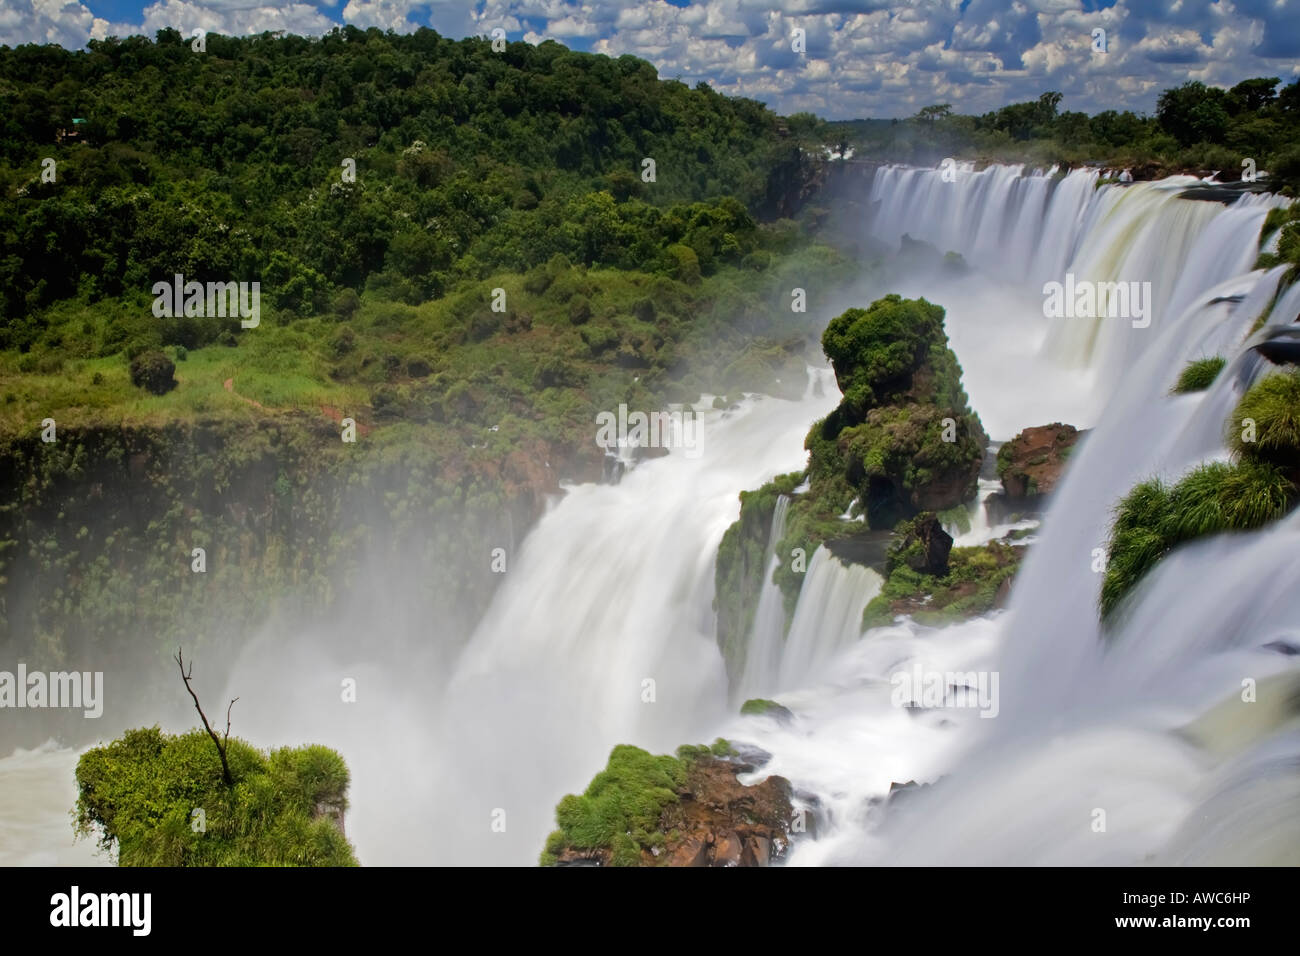 Las cataratas de Iguazú cataratas Brasil Argentina Paraguay Foto de stock